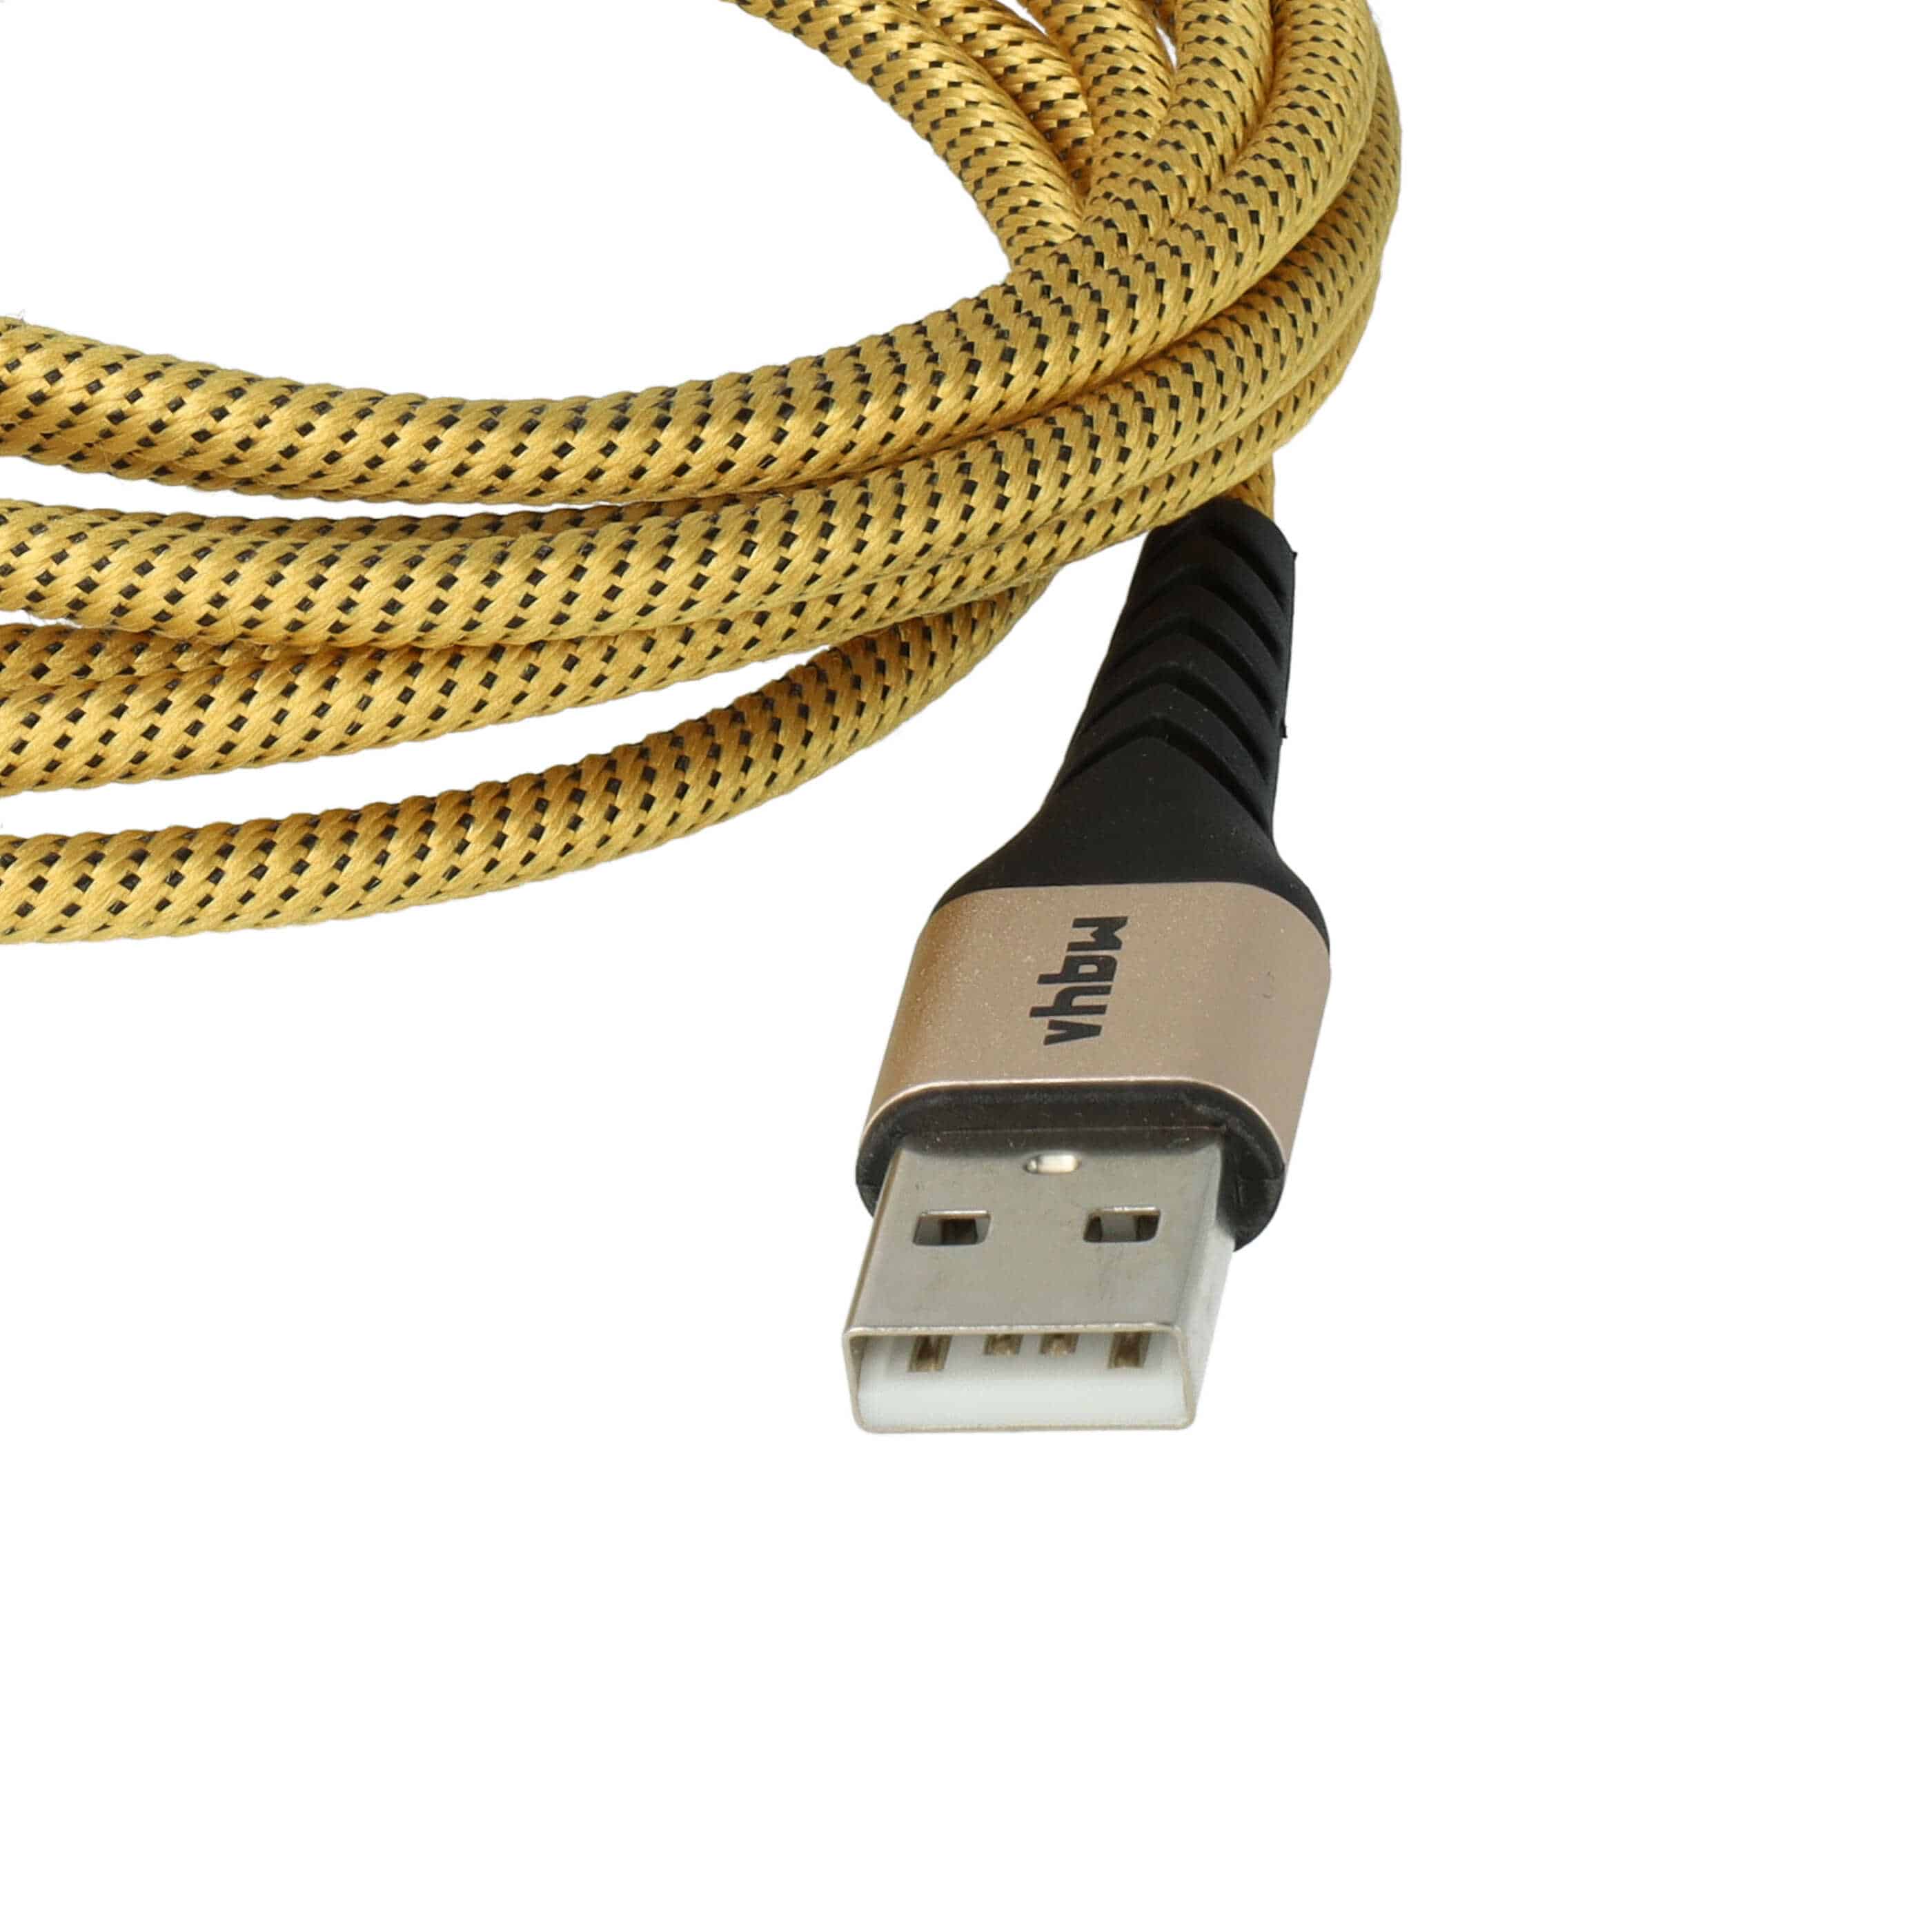 2x Cavo lightning - USB A per dispositivi Apple iOS Apple AirPods - nero / giallo, 180cm